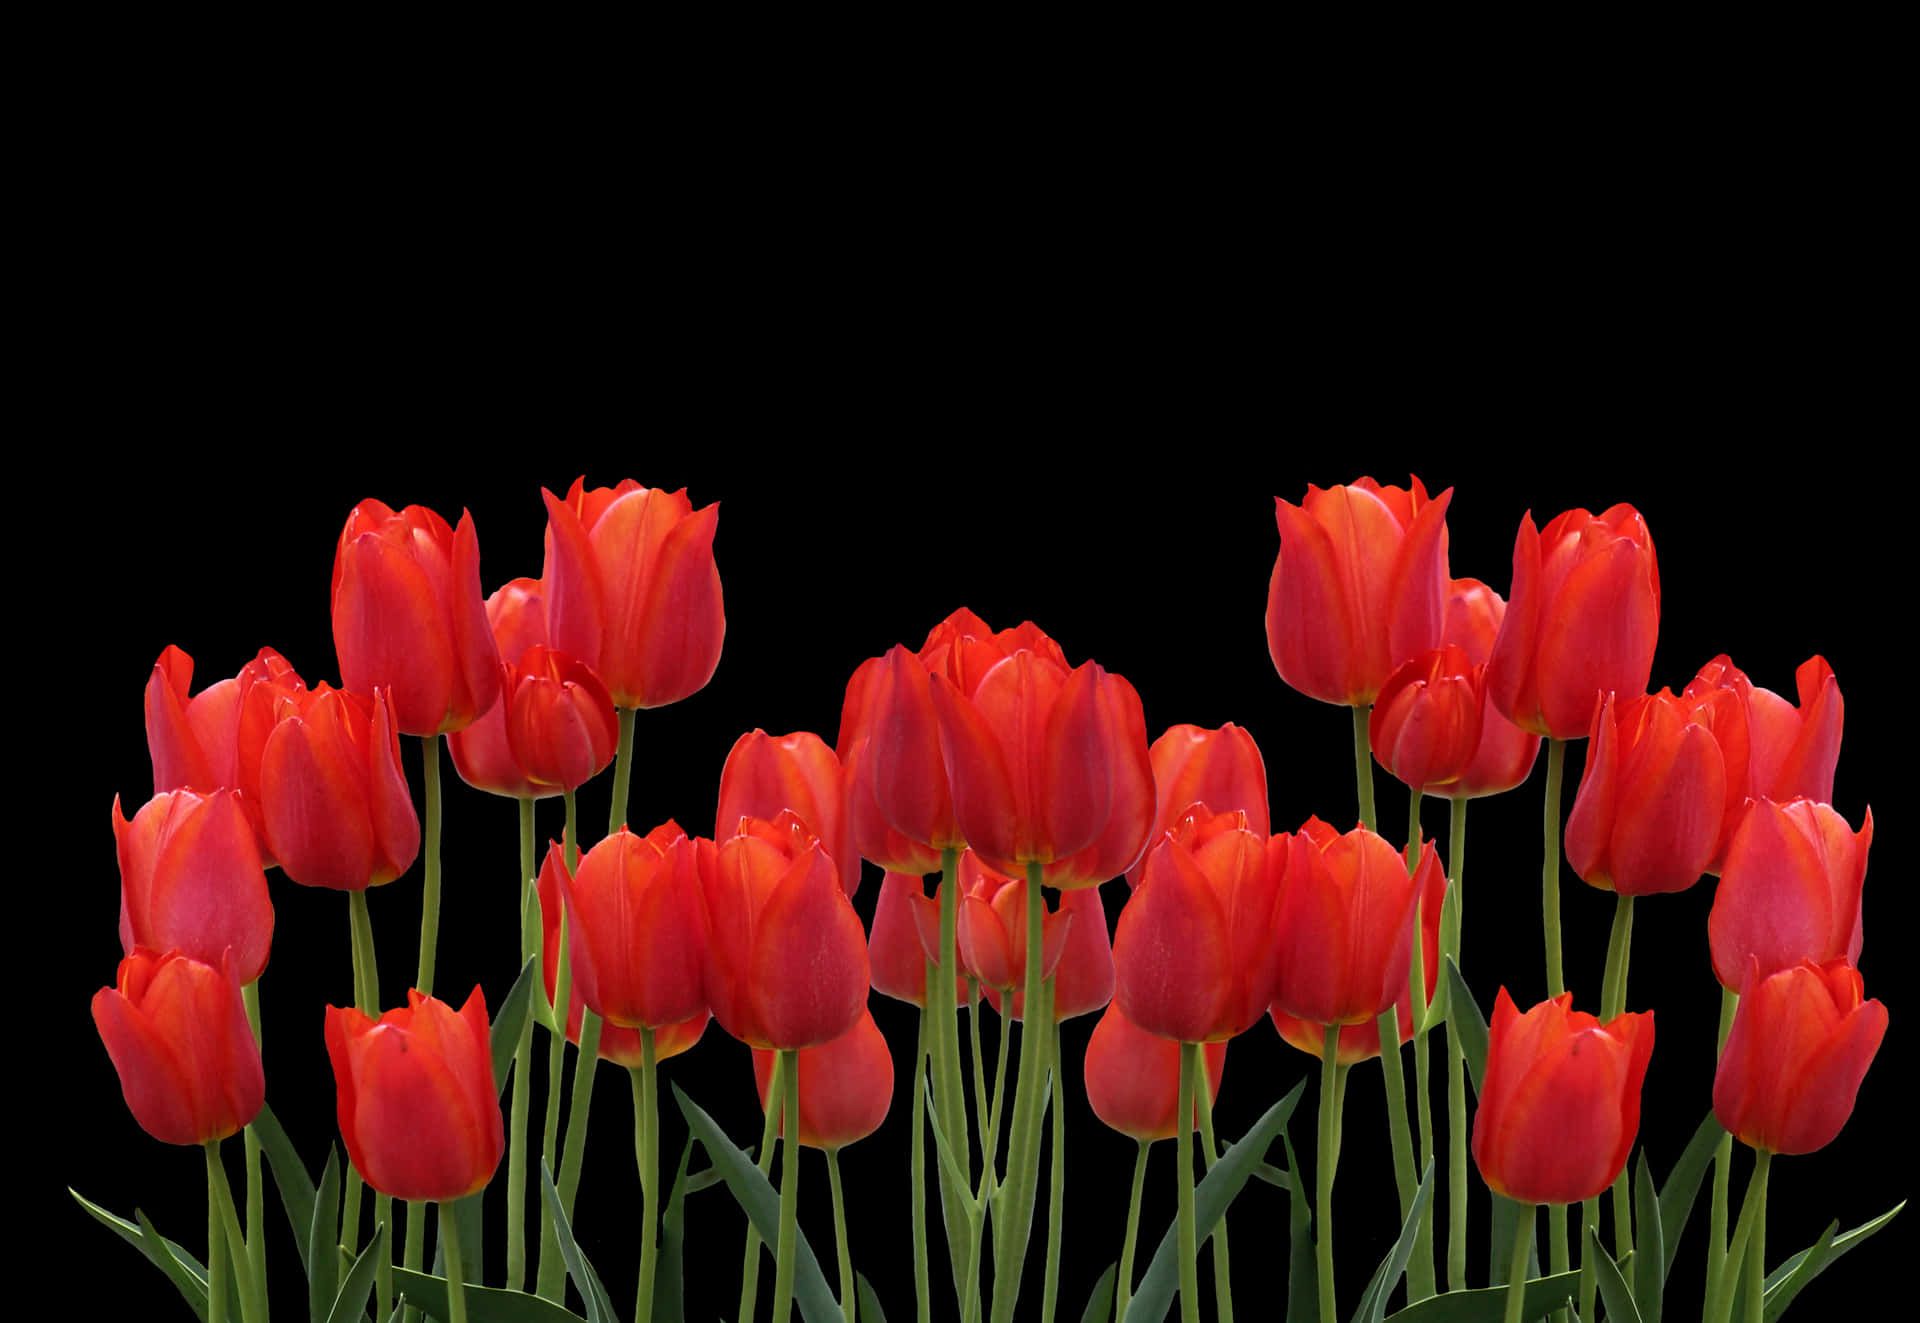 Vibrant_ Red_ Tulips_ Against_ Black_ Background.jpg PNG image